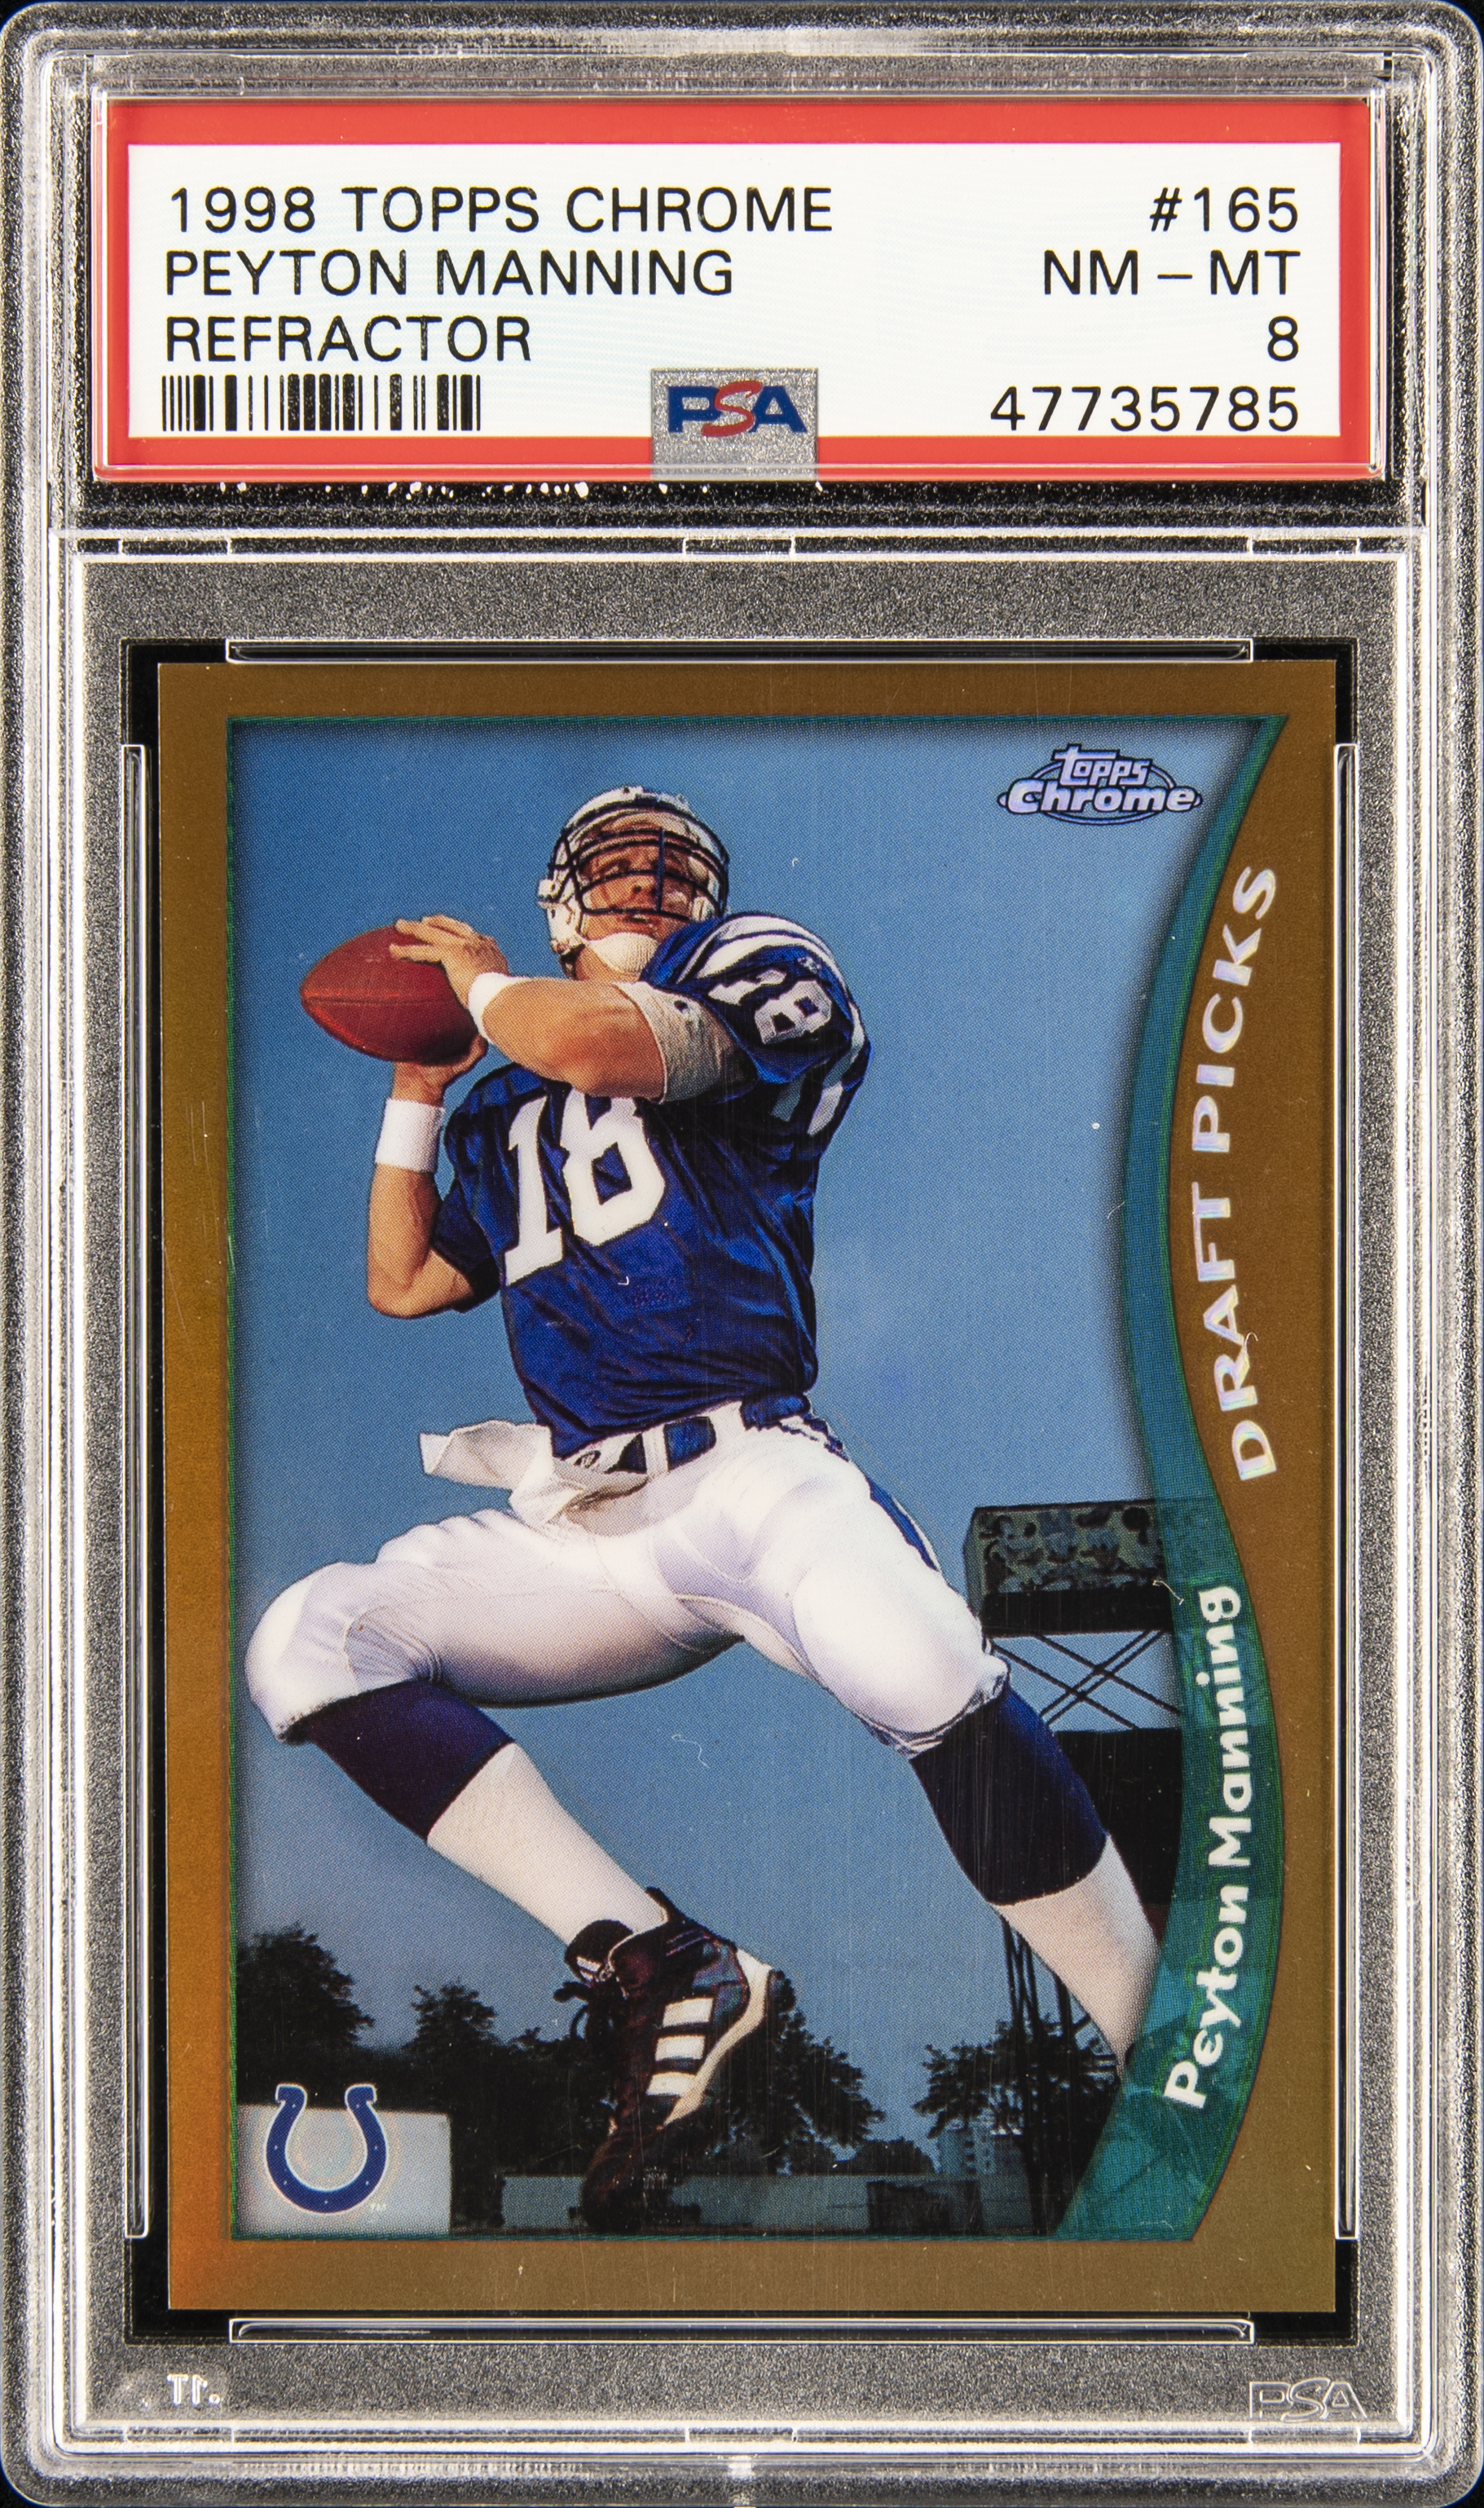 1998 Topps Chrome Refractor 165 Peyton Manning Rookie Card – PSA NM-MT 8